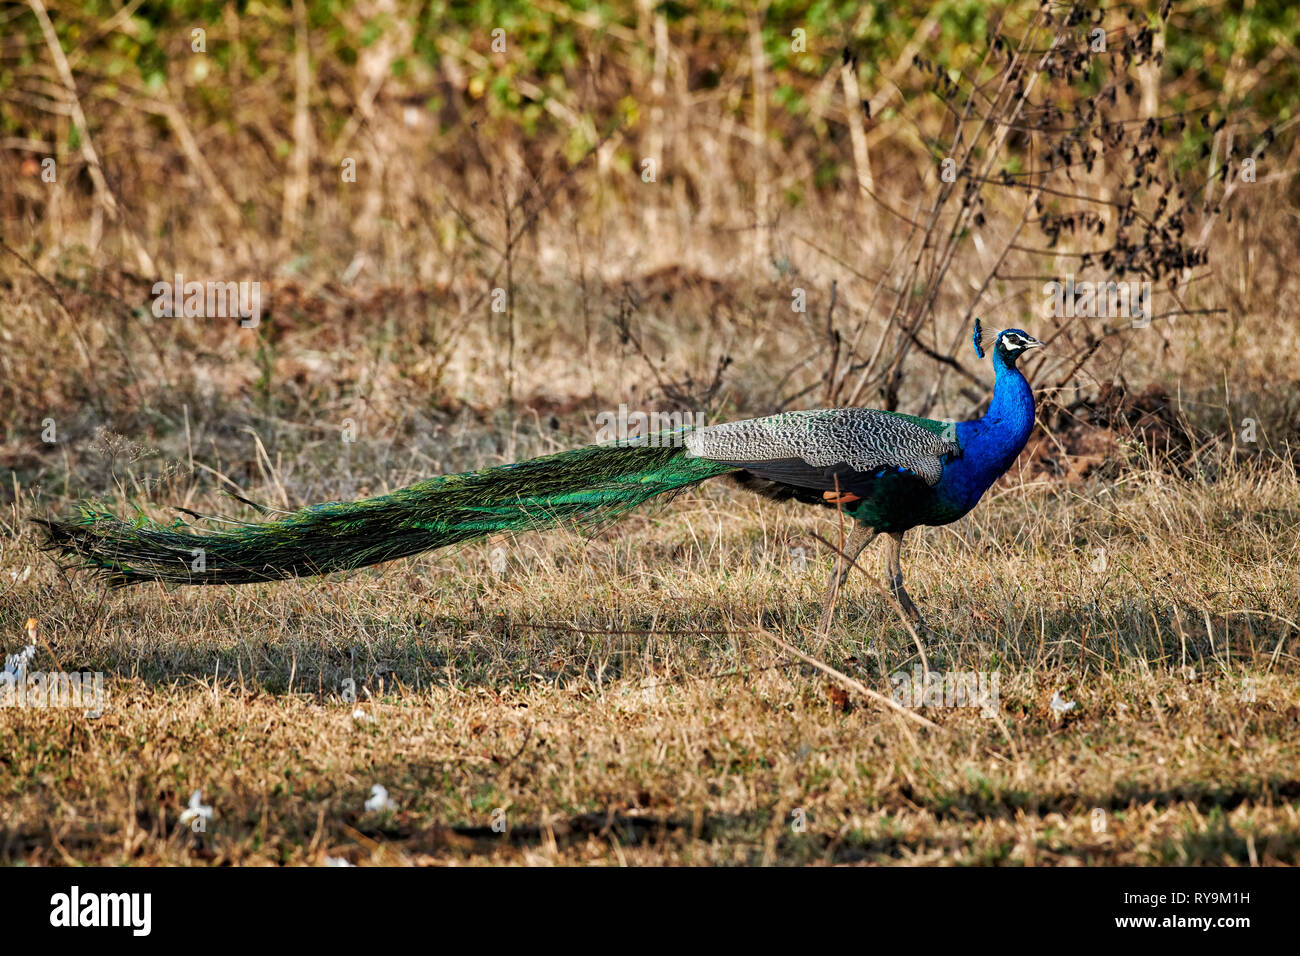 Peacock, Indian peafowl comunes o blue peafowl, Pavo cristatus, Reserva de Tigres Bandipur, Karnataka, India Foto de stock